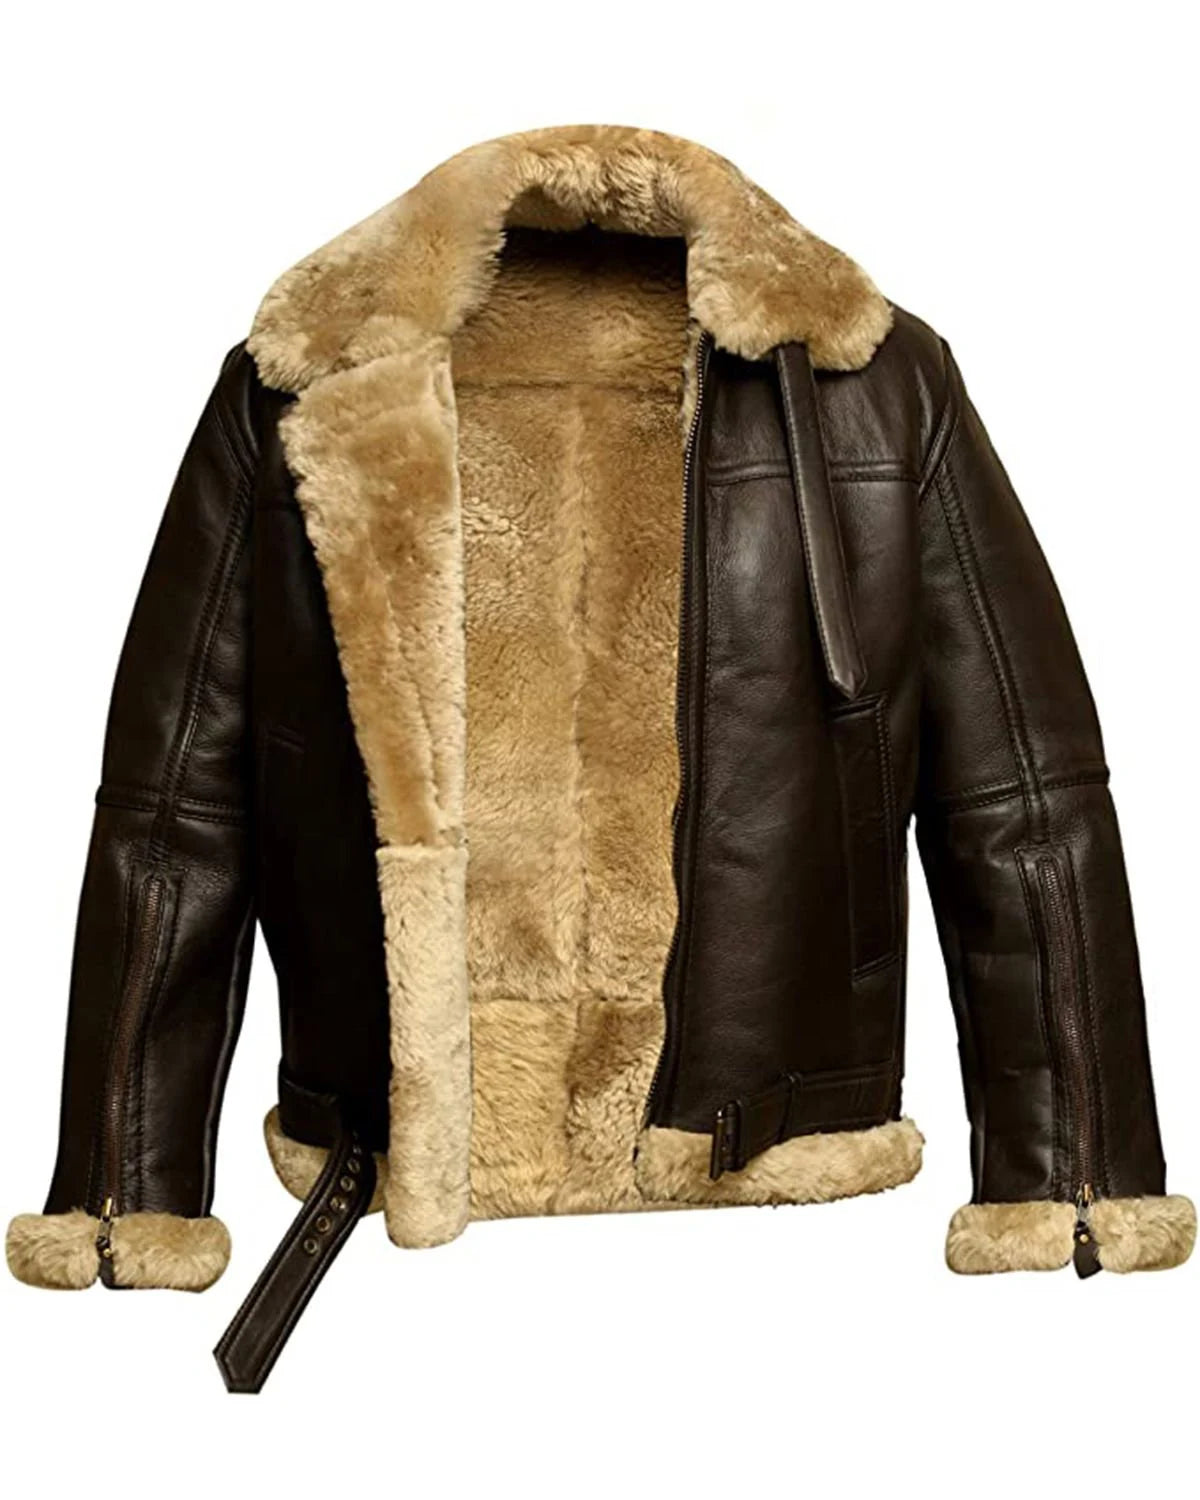 warm winter jacket men raf 3 jackets men aviator jacket men bomber leather jacket fur jackets leather jackets men shearling jackets men genuine leather jackets men valentines day gift for men